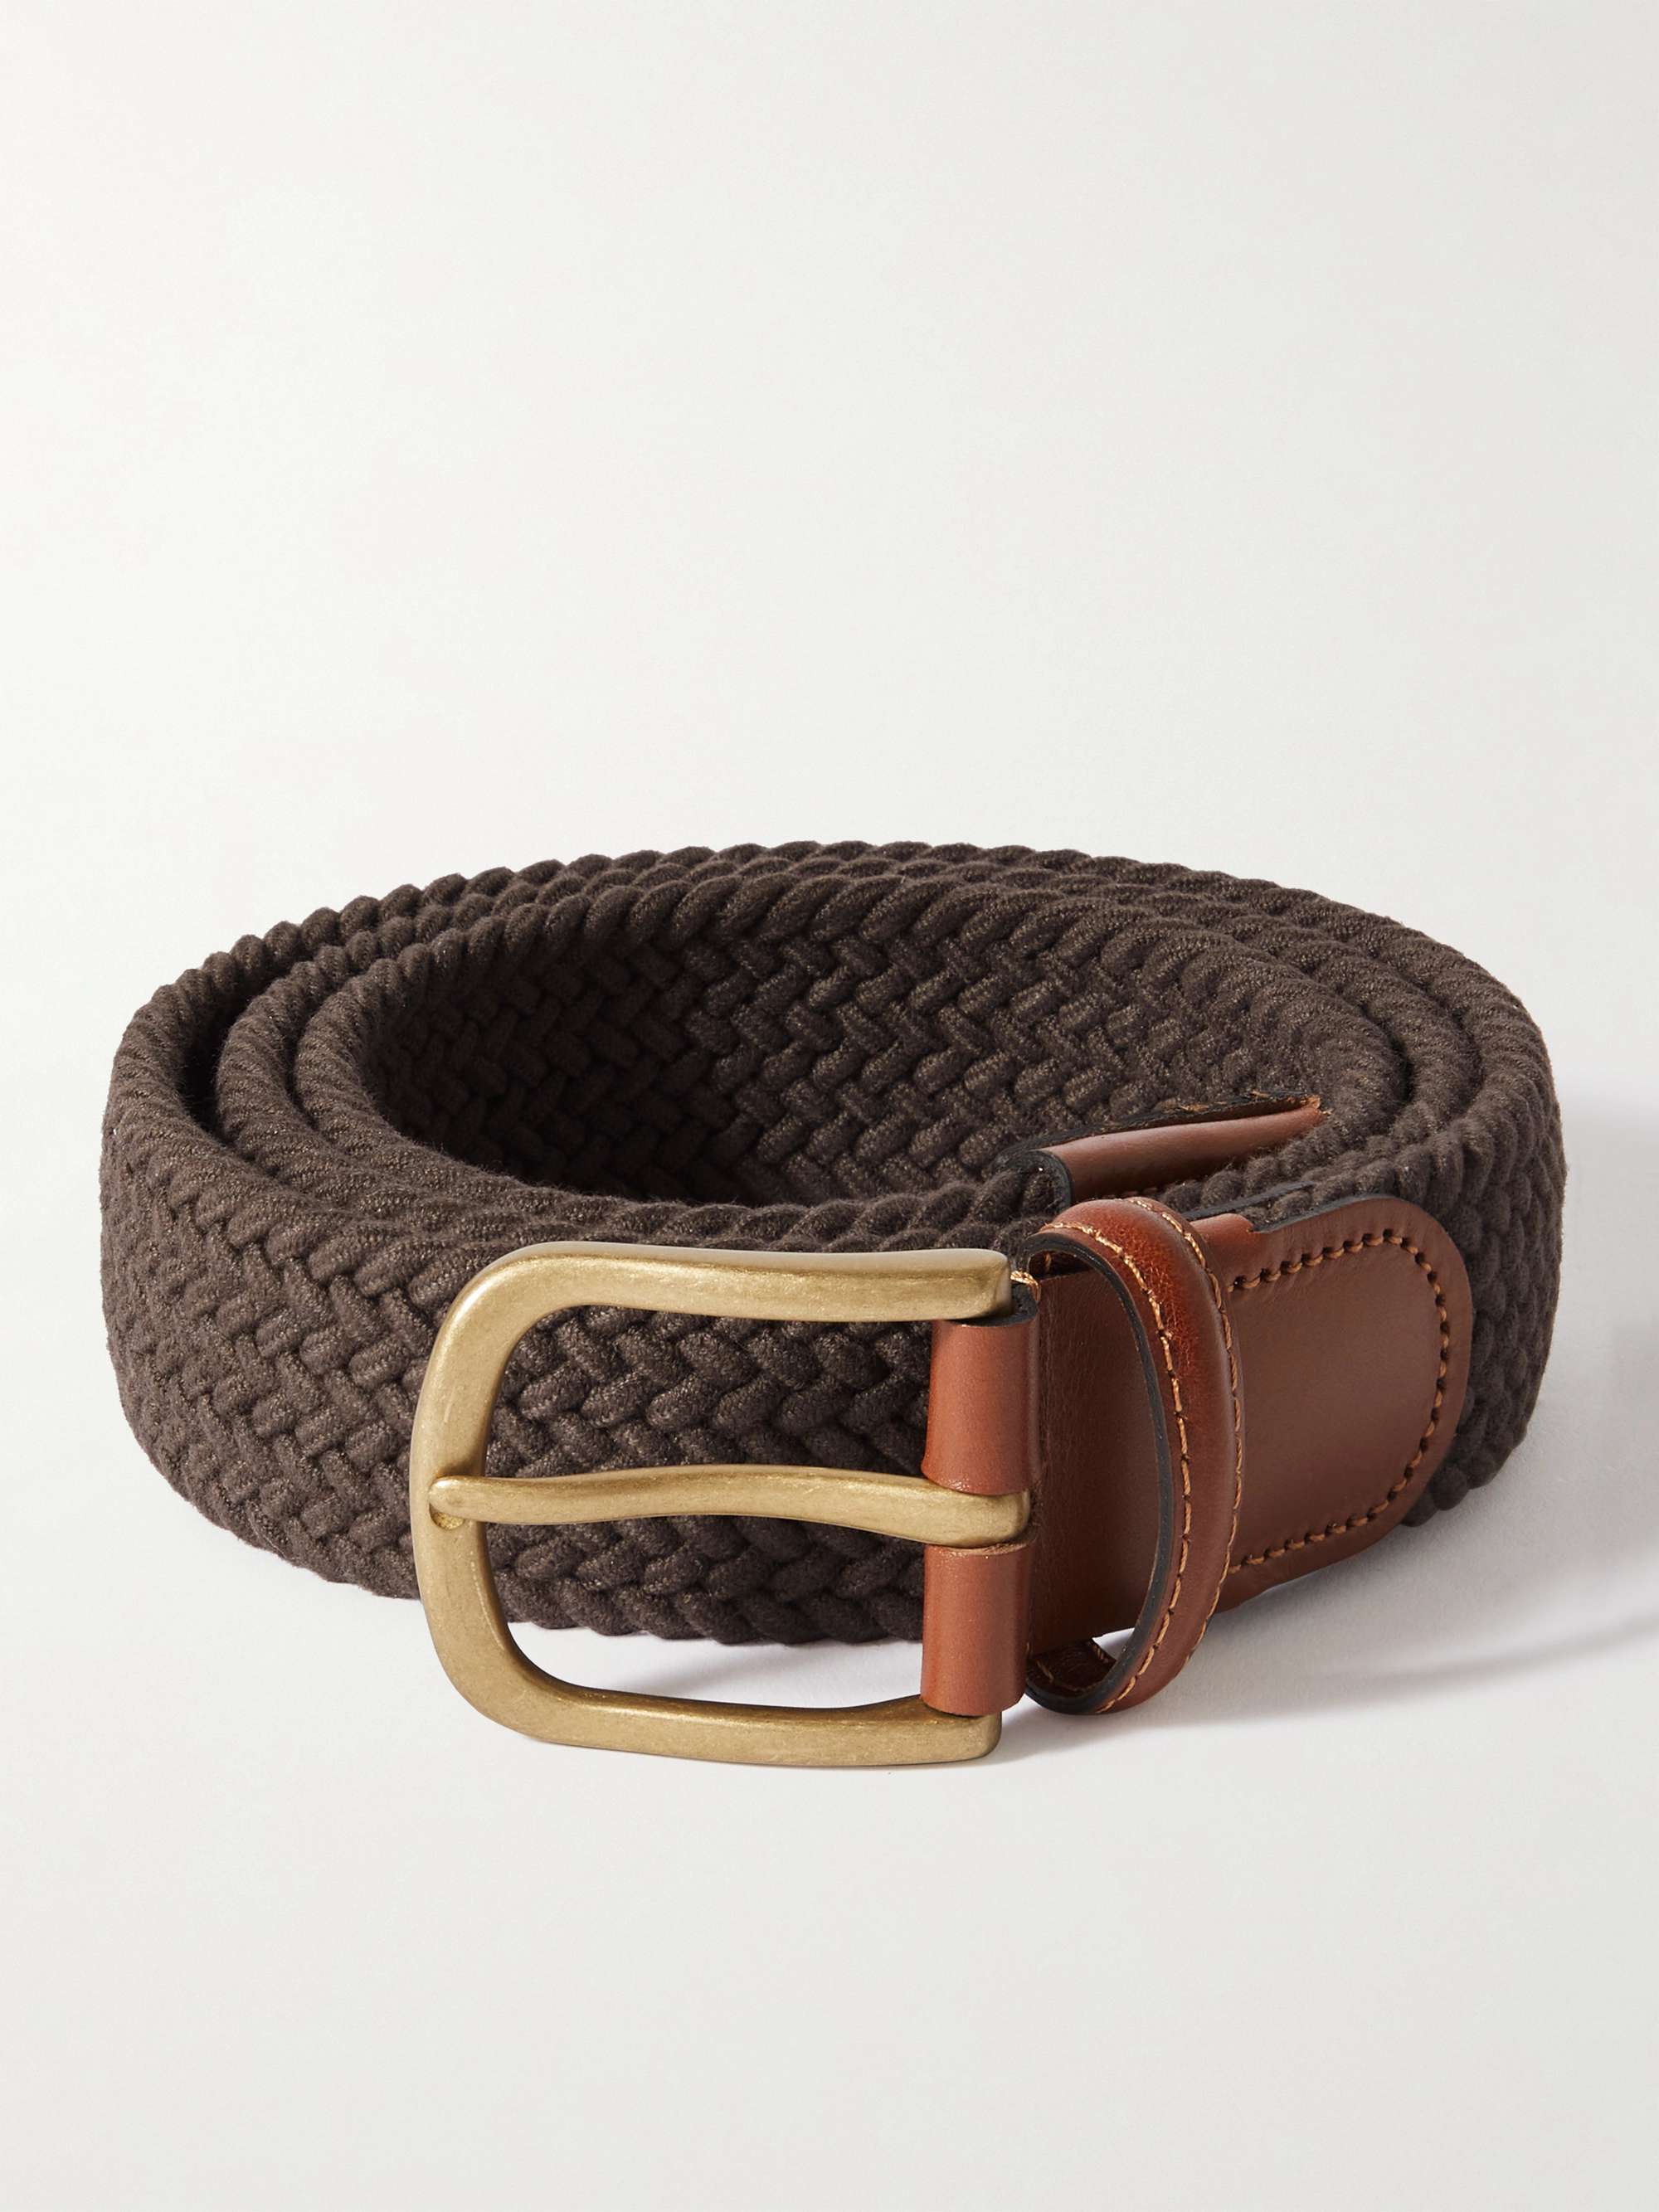 Cloth belt